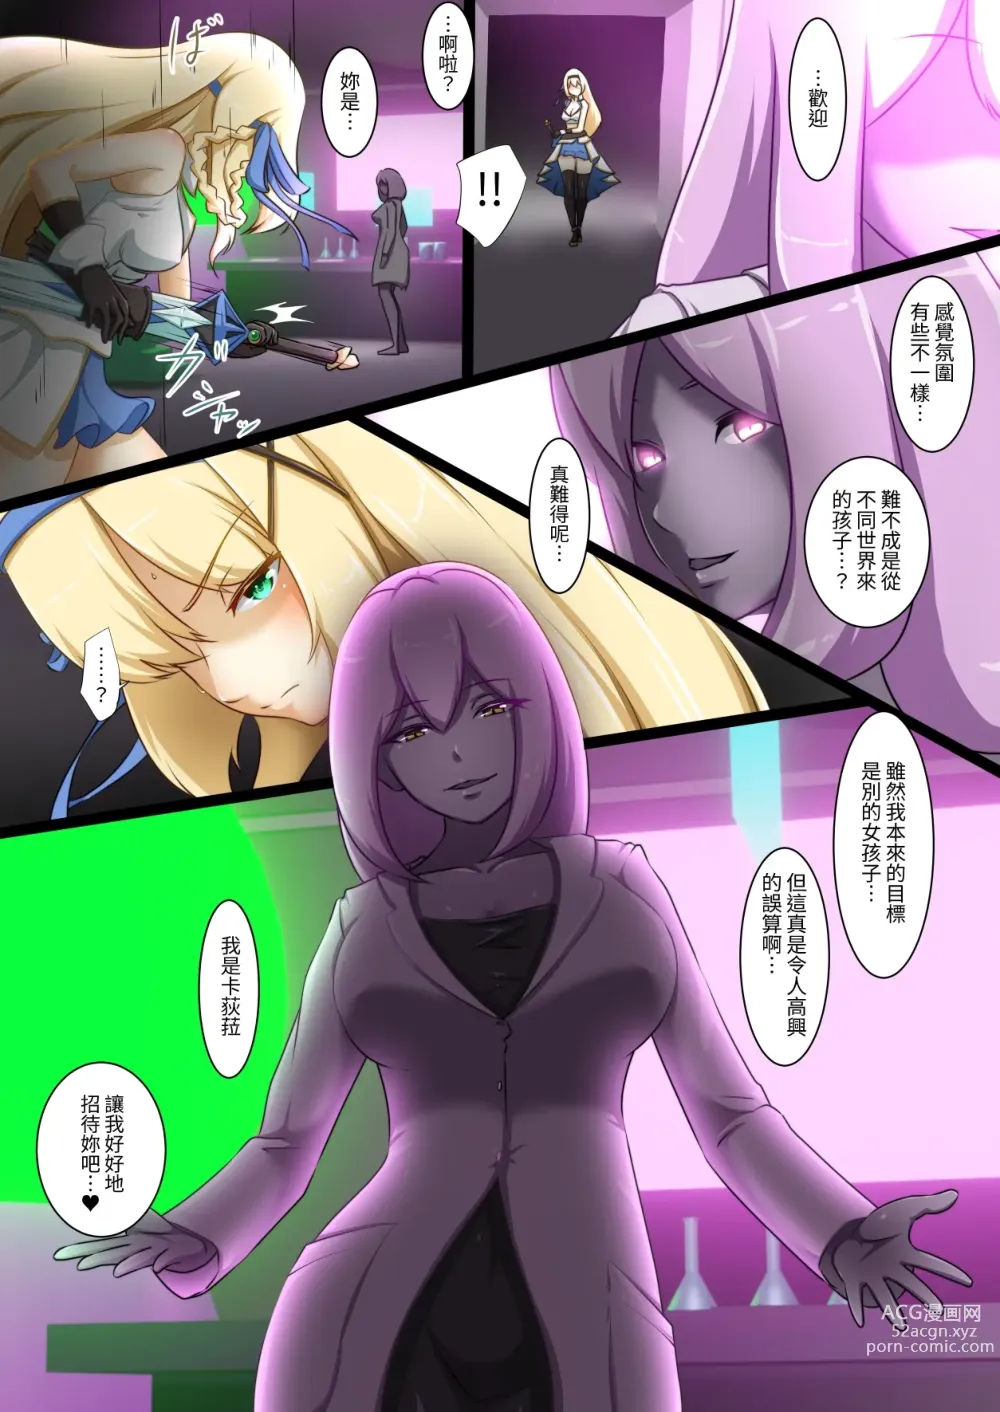 Page 4 of doujinshi 公主骑士与色色敌人战斗并败北的故事